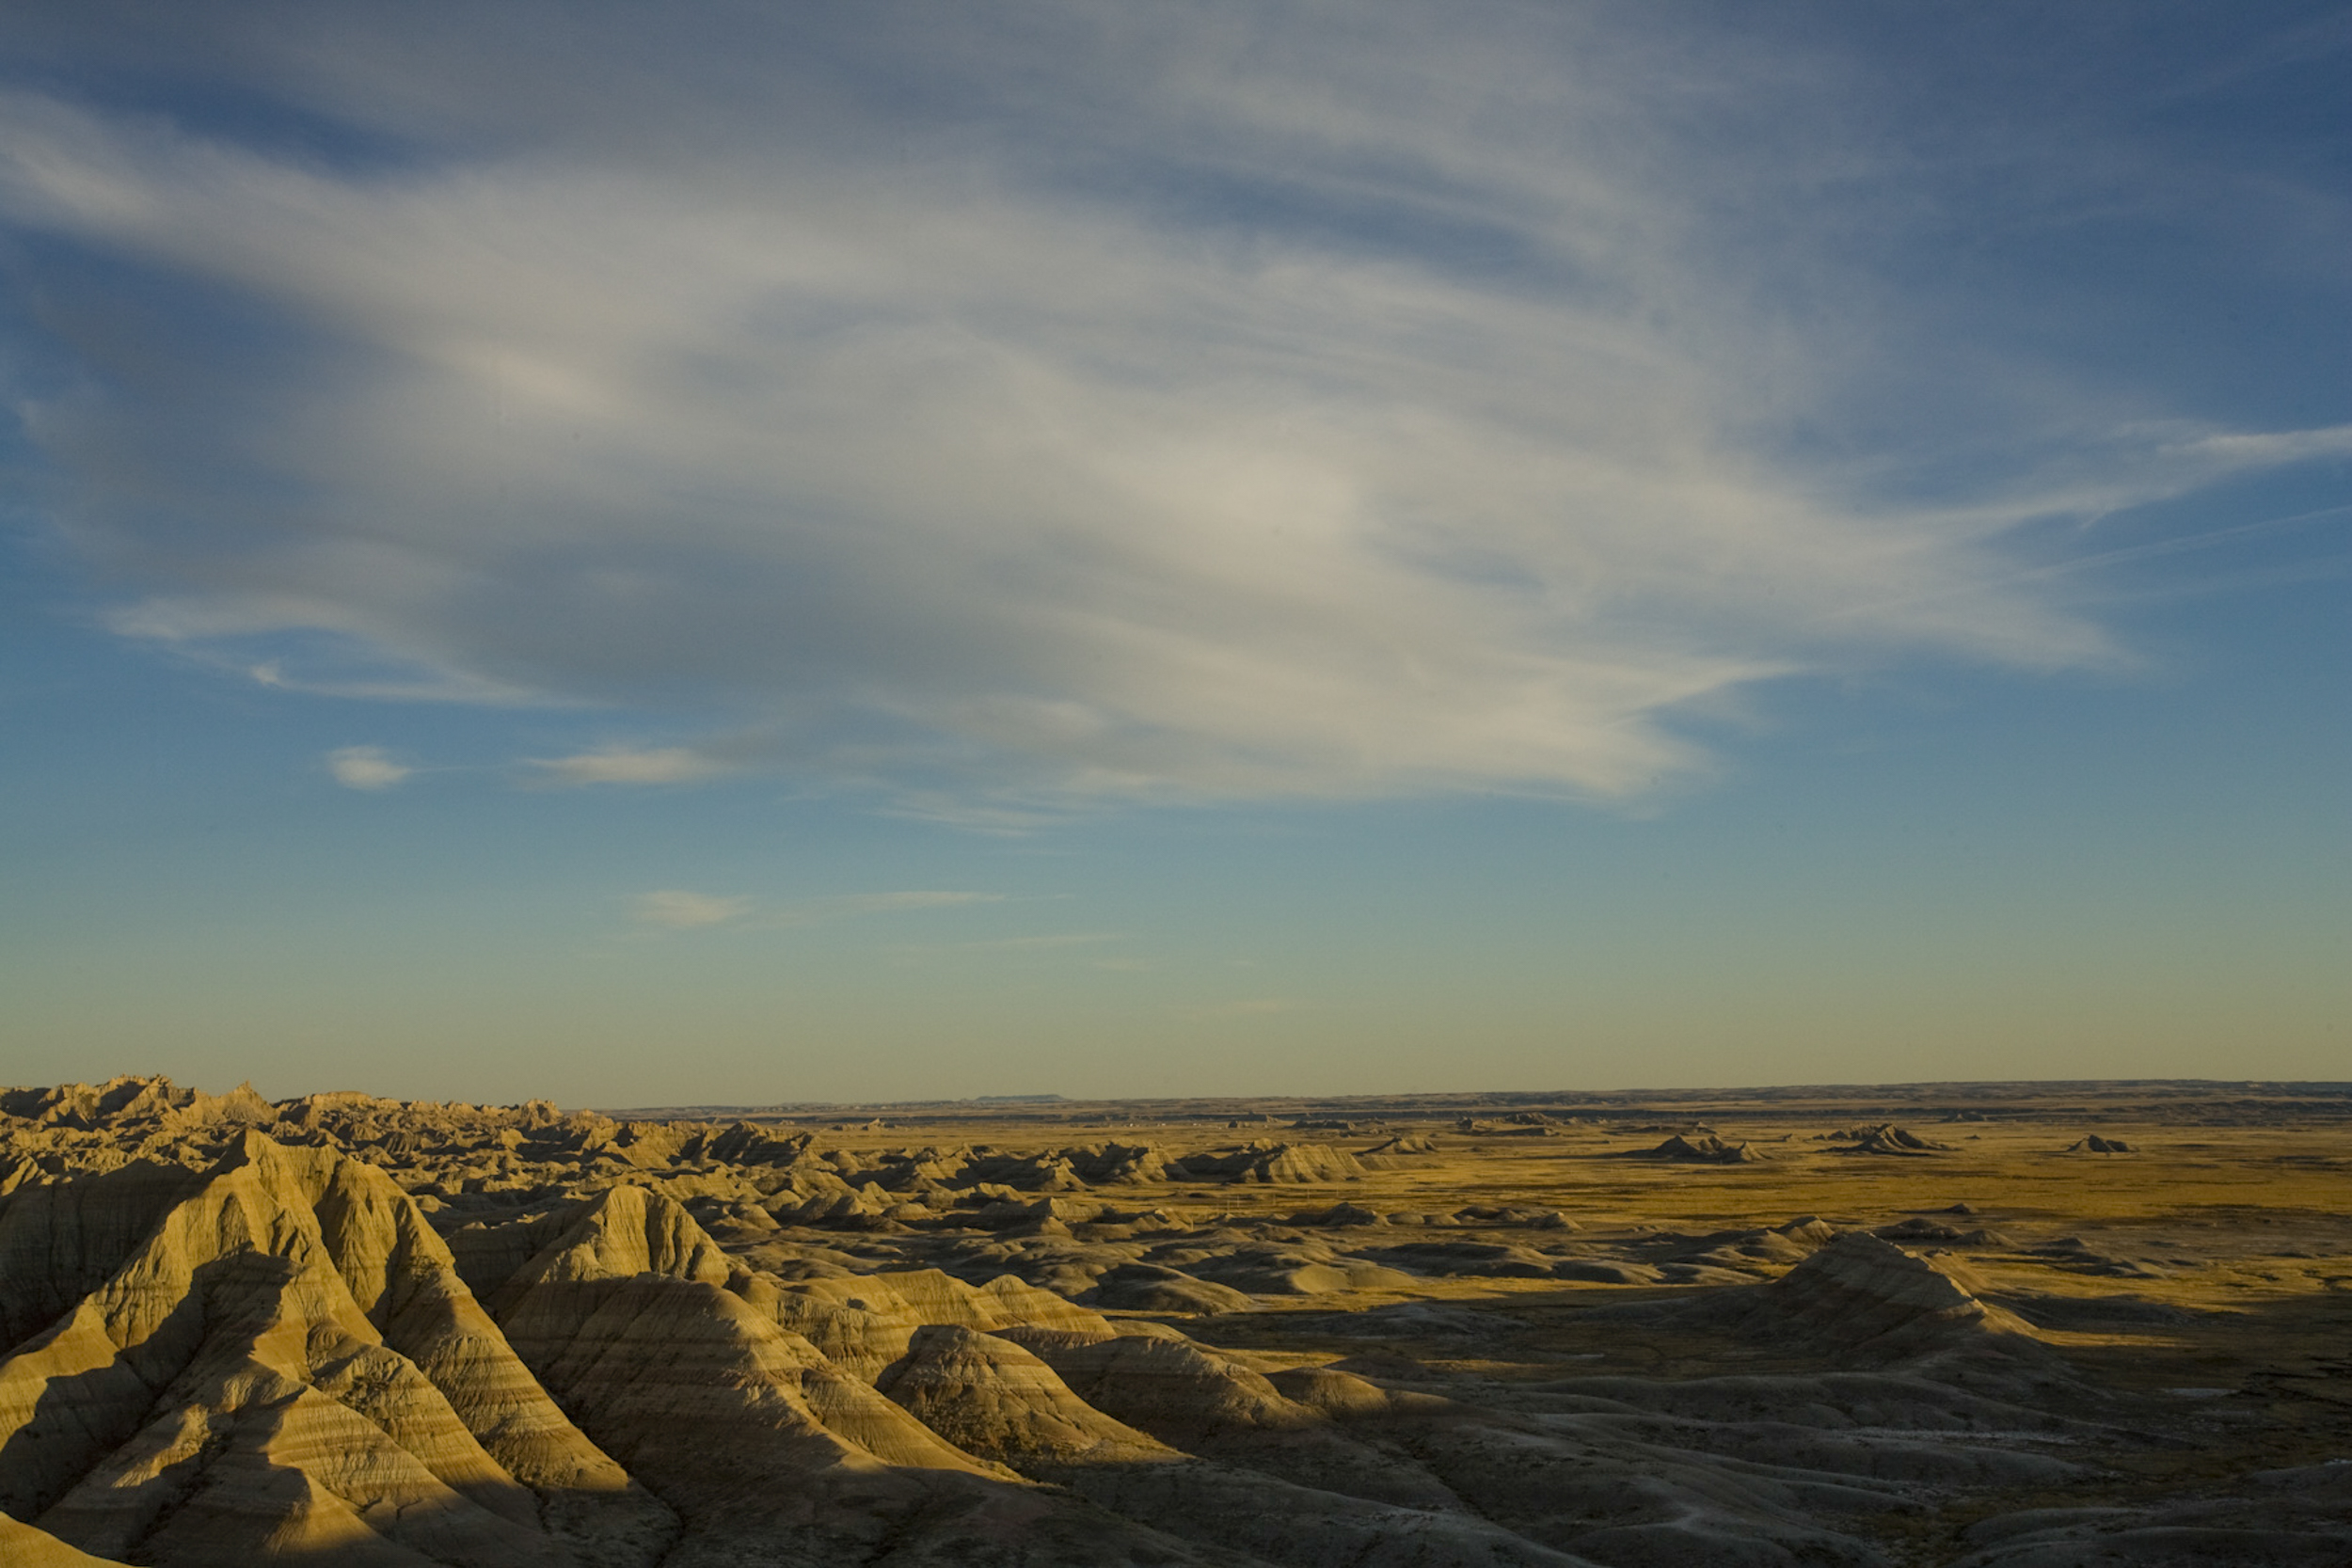  Badlands National Park, South Dakota 